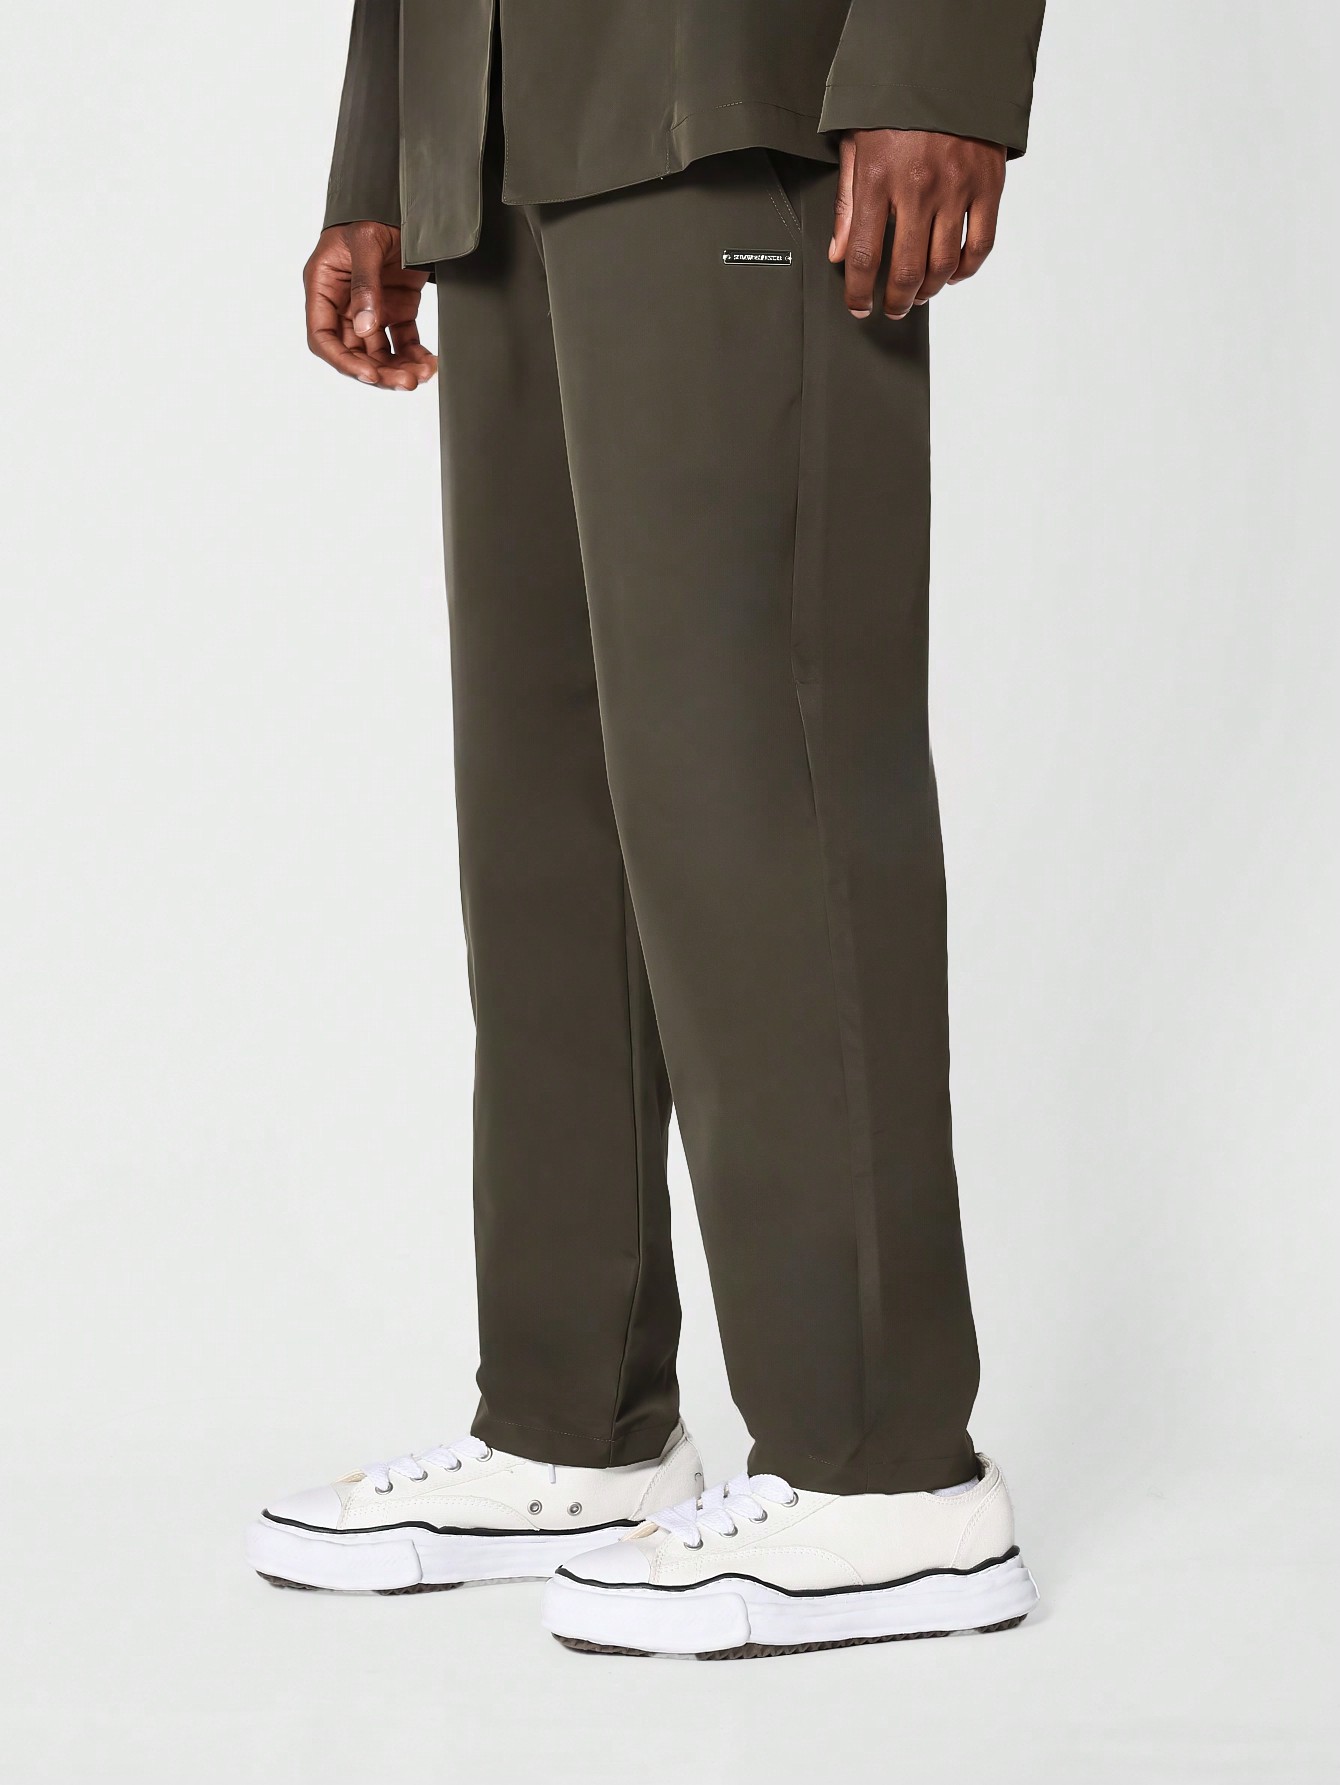 SUMWON Нейлоновые брюки для костюма, мокко браун men s fitness jogging sport suit trouser